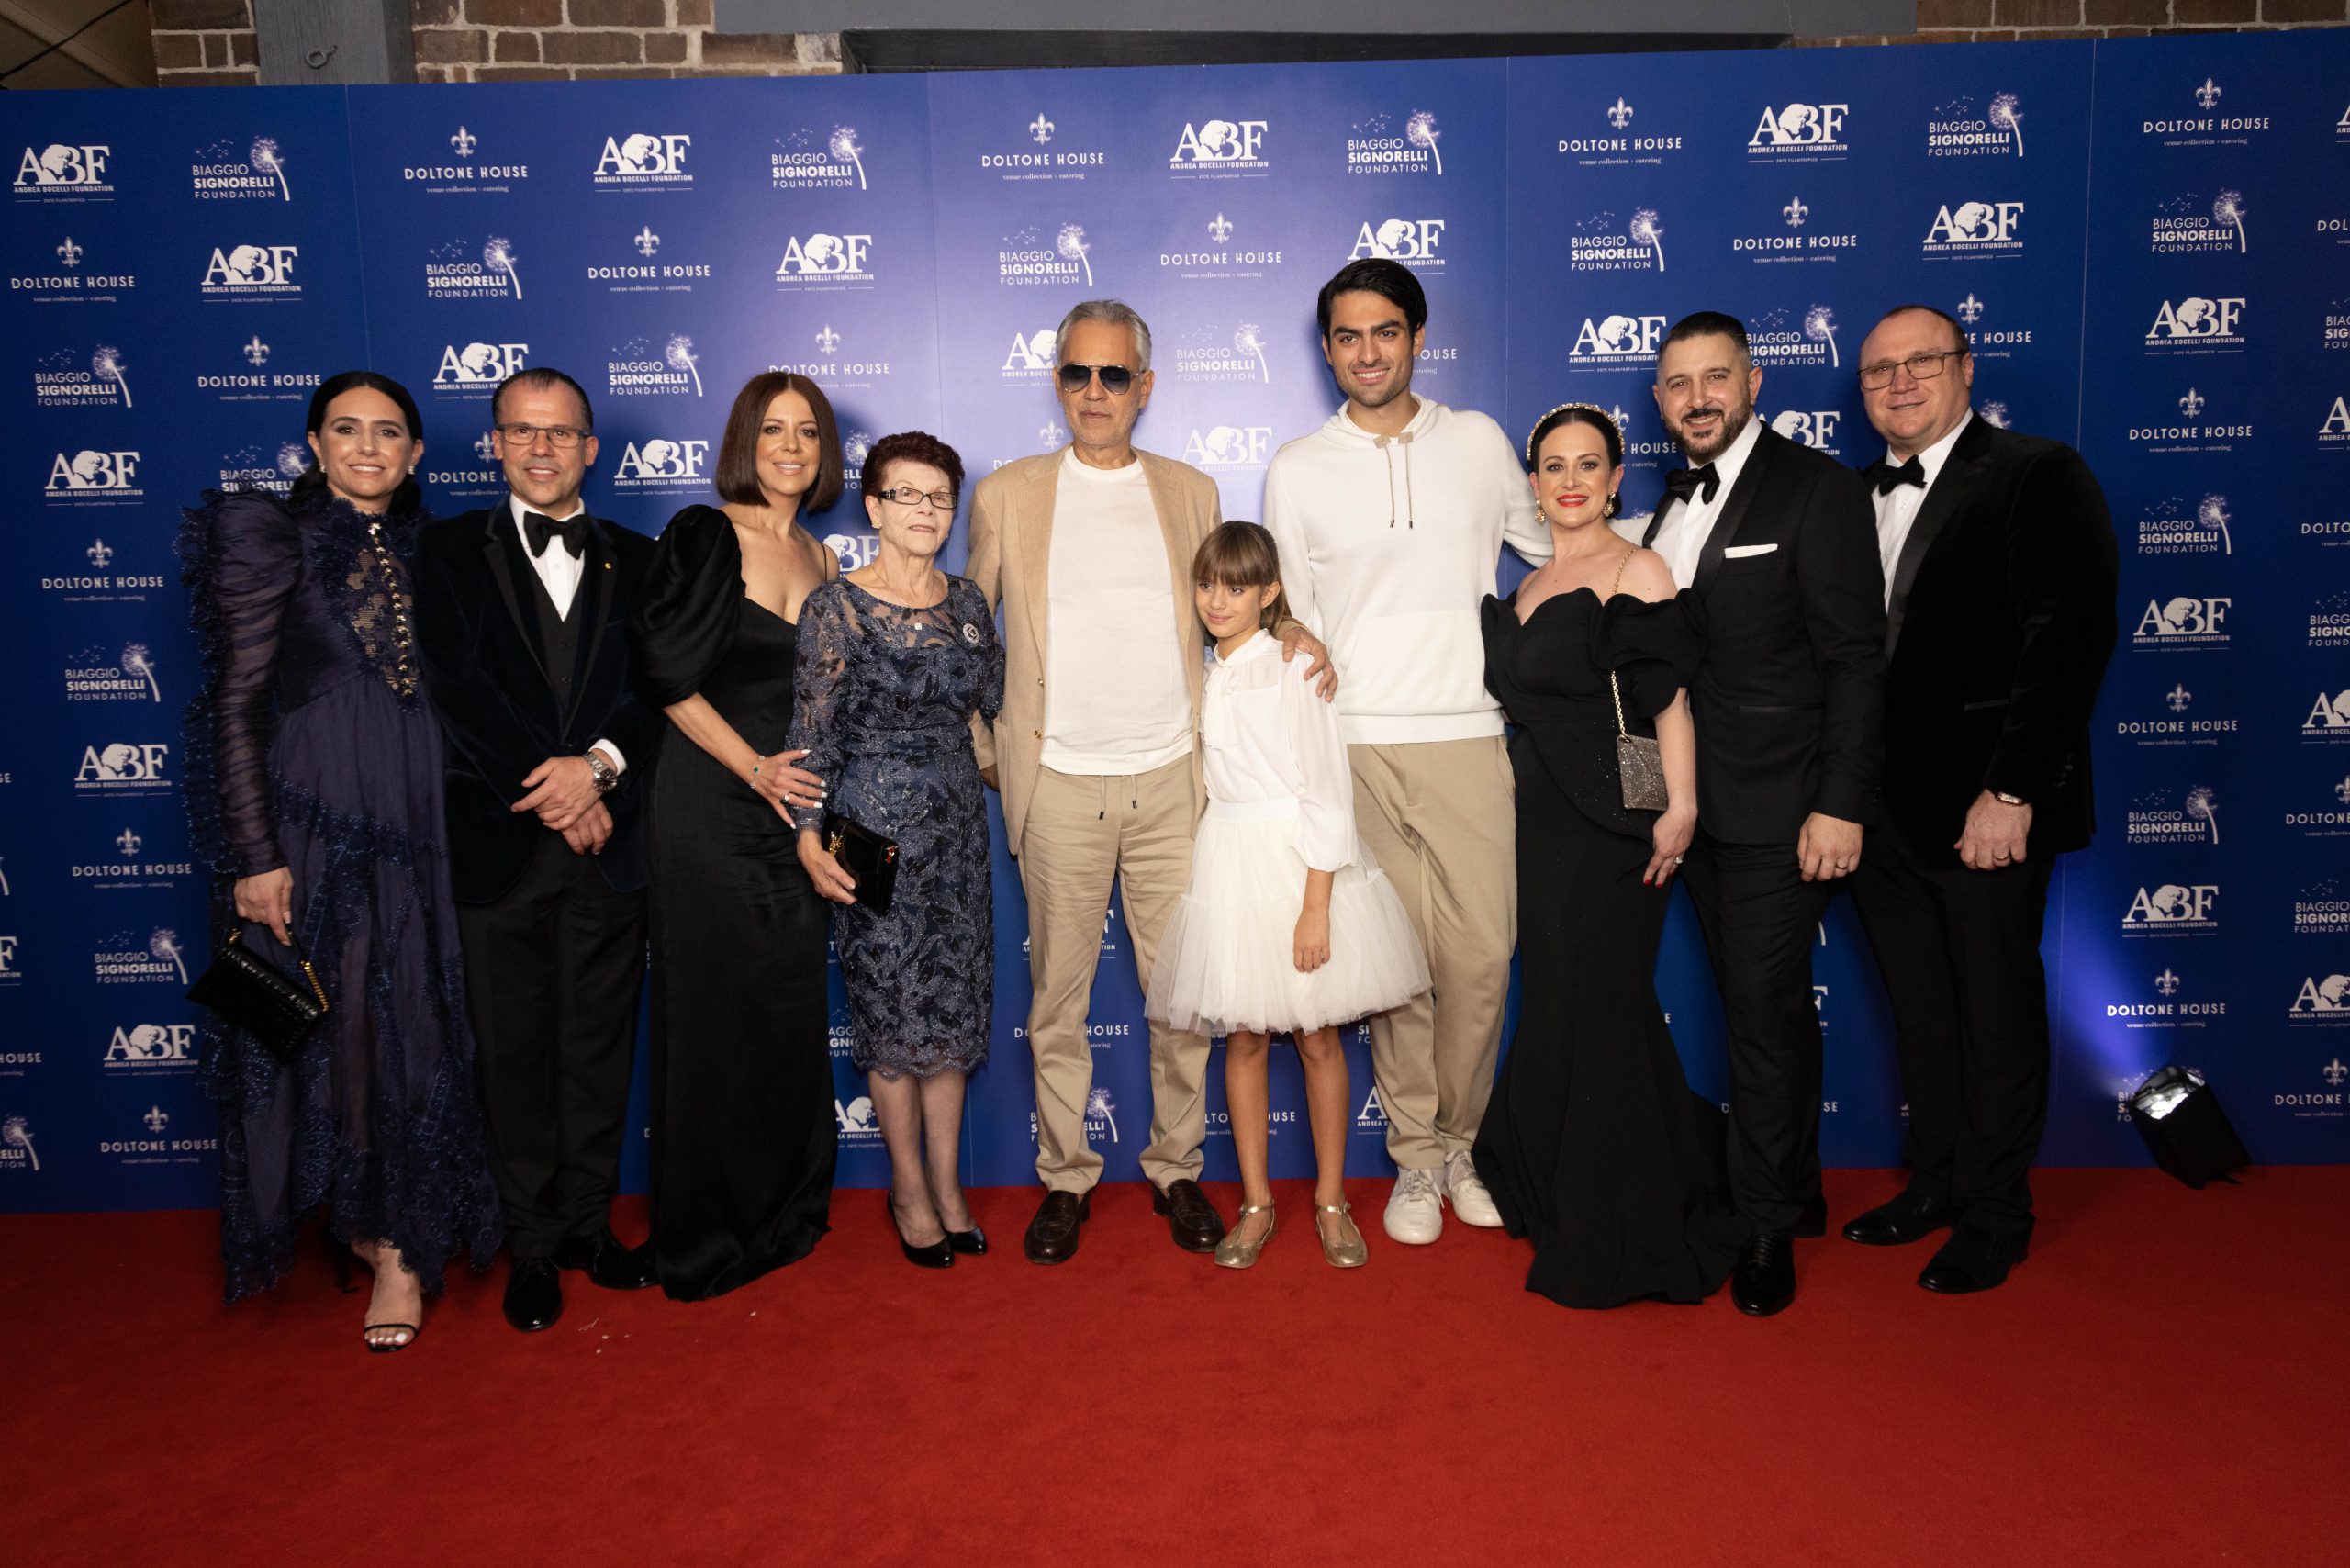 Who we are - Andrea Bocelli Foundation